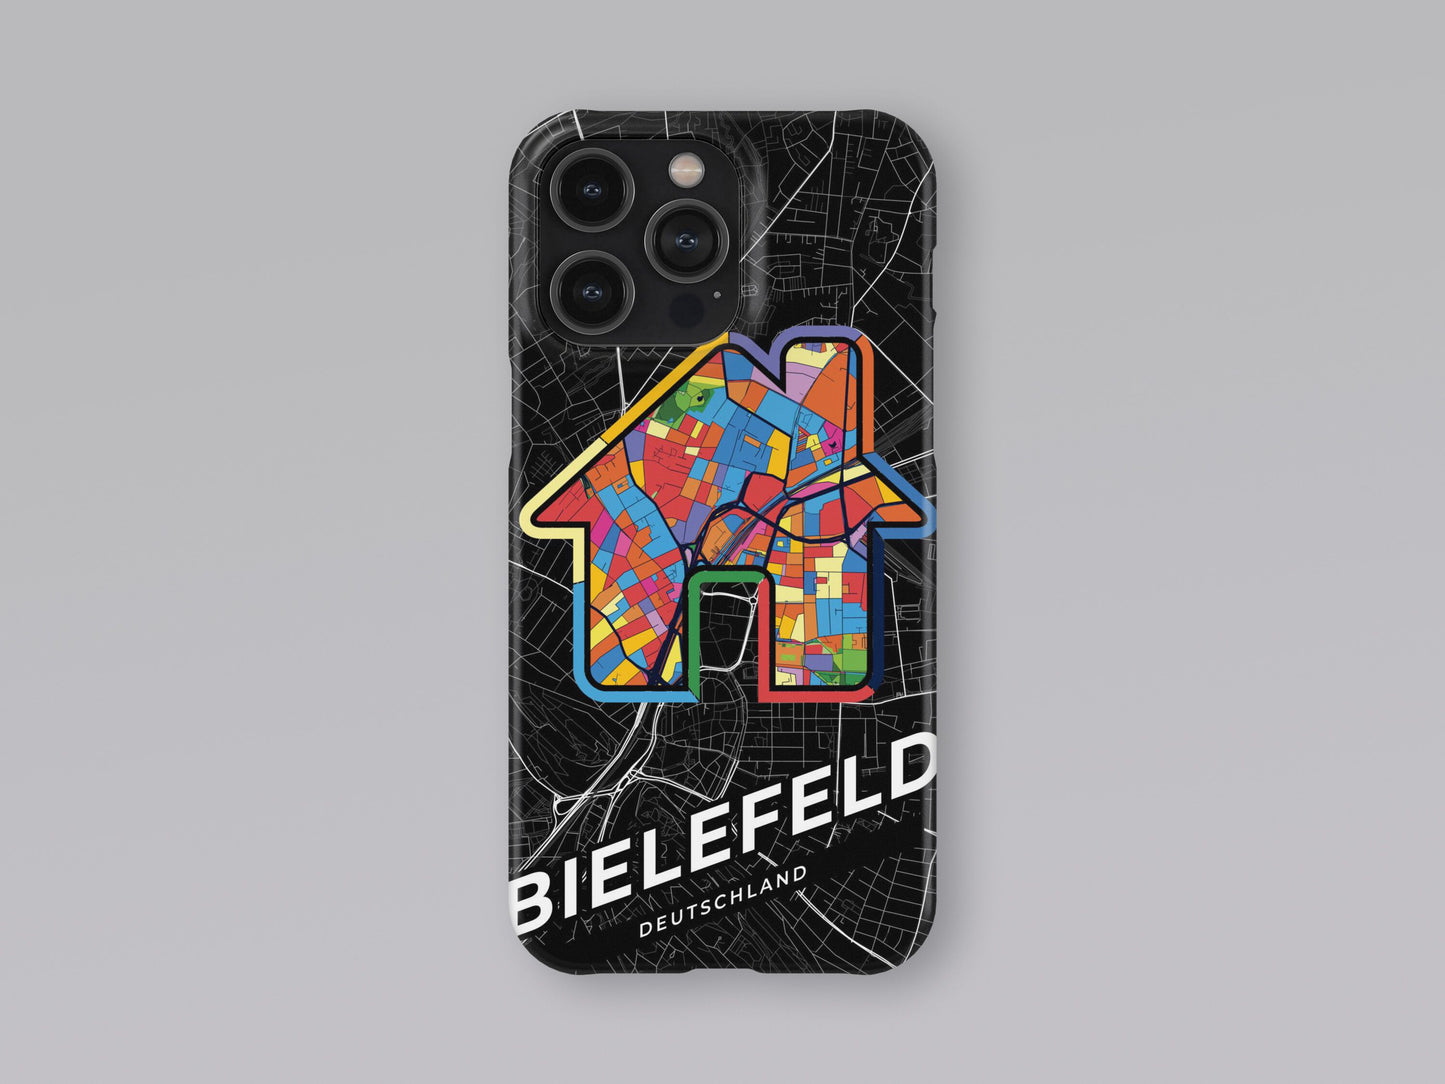 Bielefeld Deutschland slim phone case with colorful icon. Birthday, wedding or housewarming gift. Couple match cases. 3